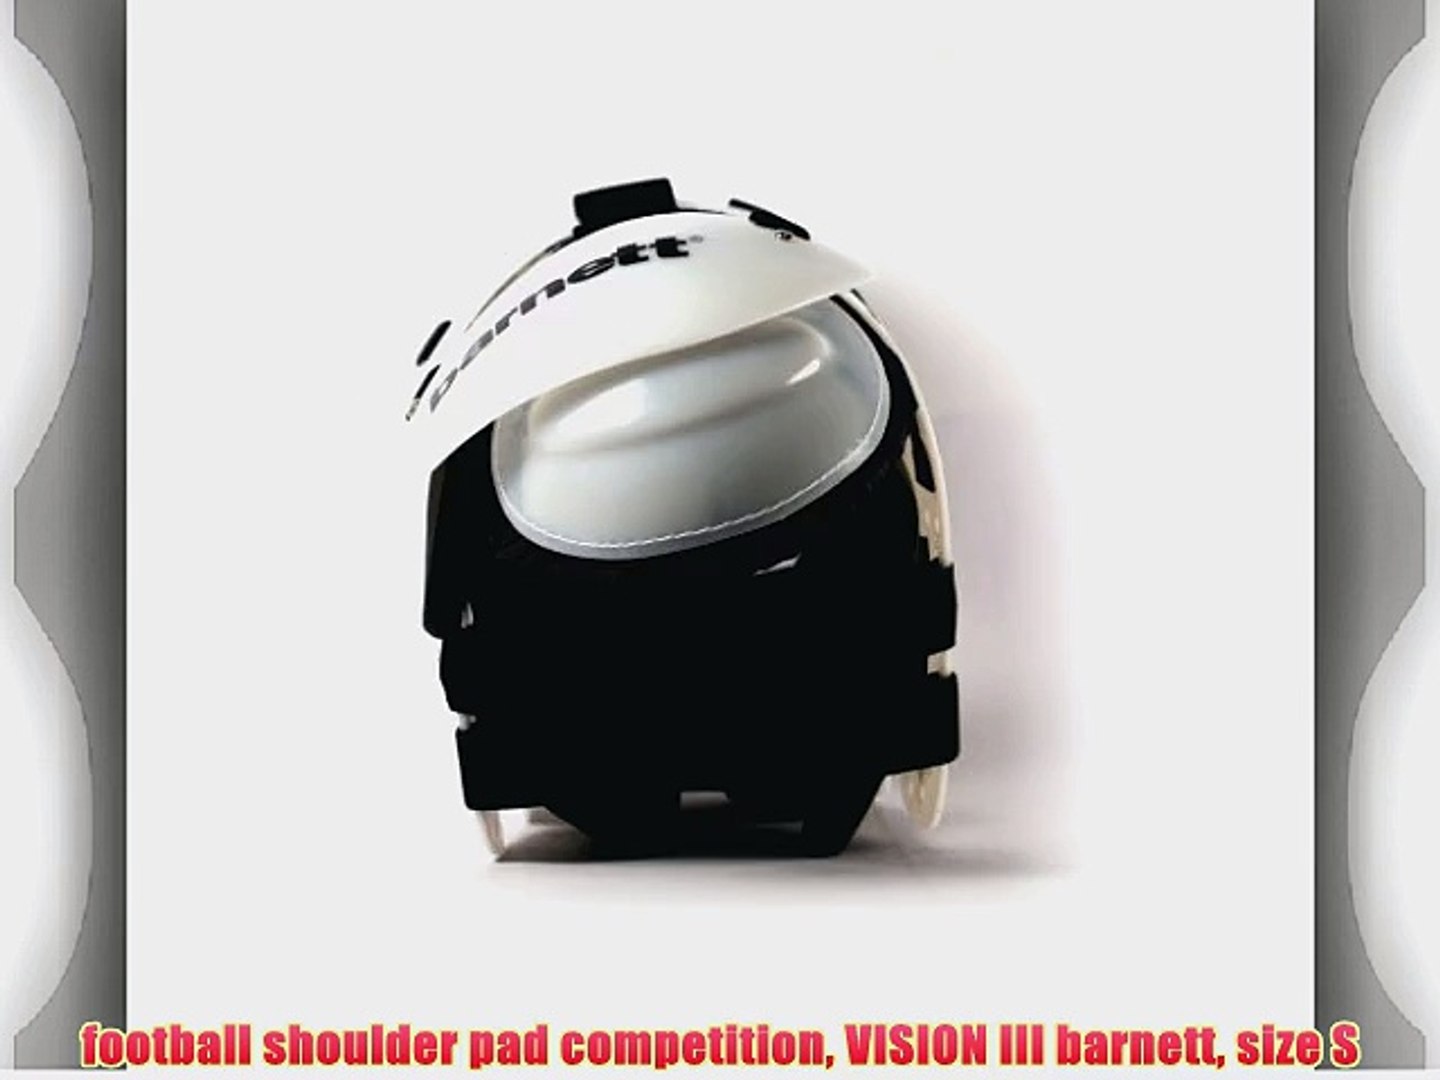 size M barnett rugby shoulder pad pro RSP-PRO 5